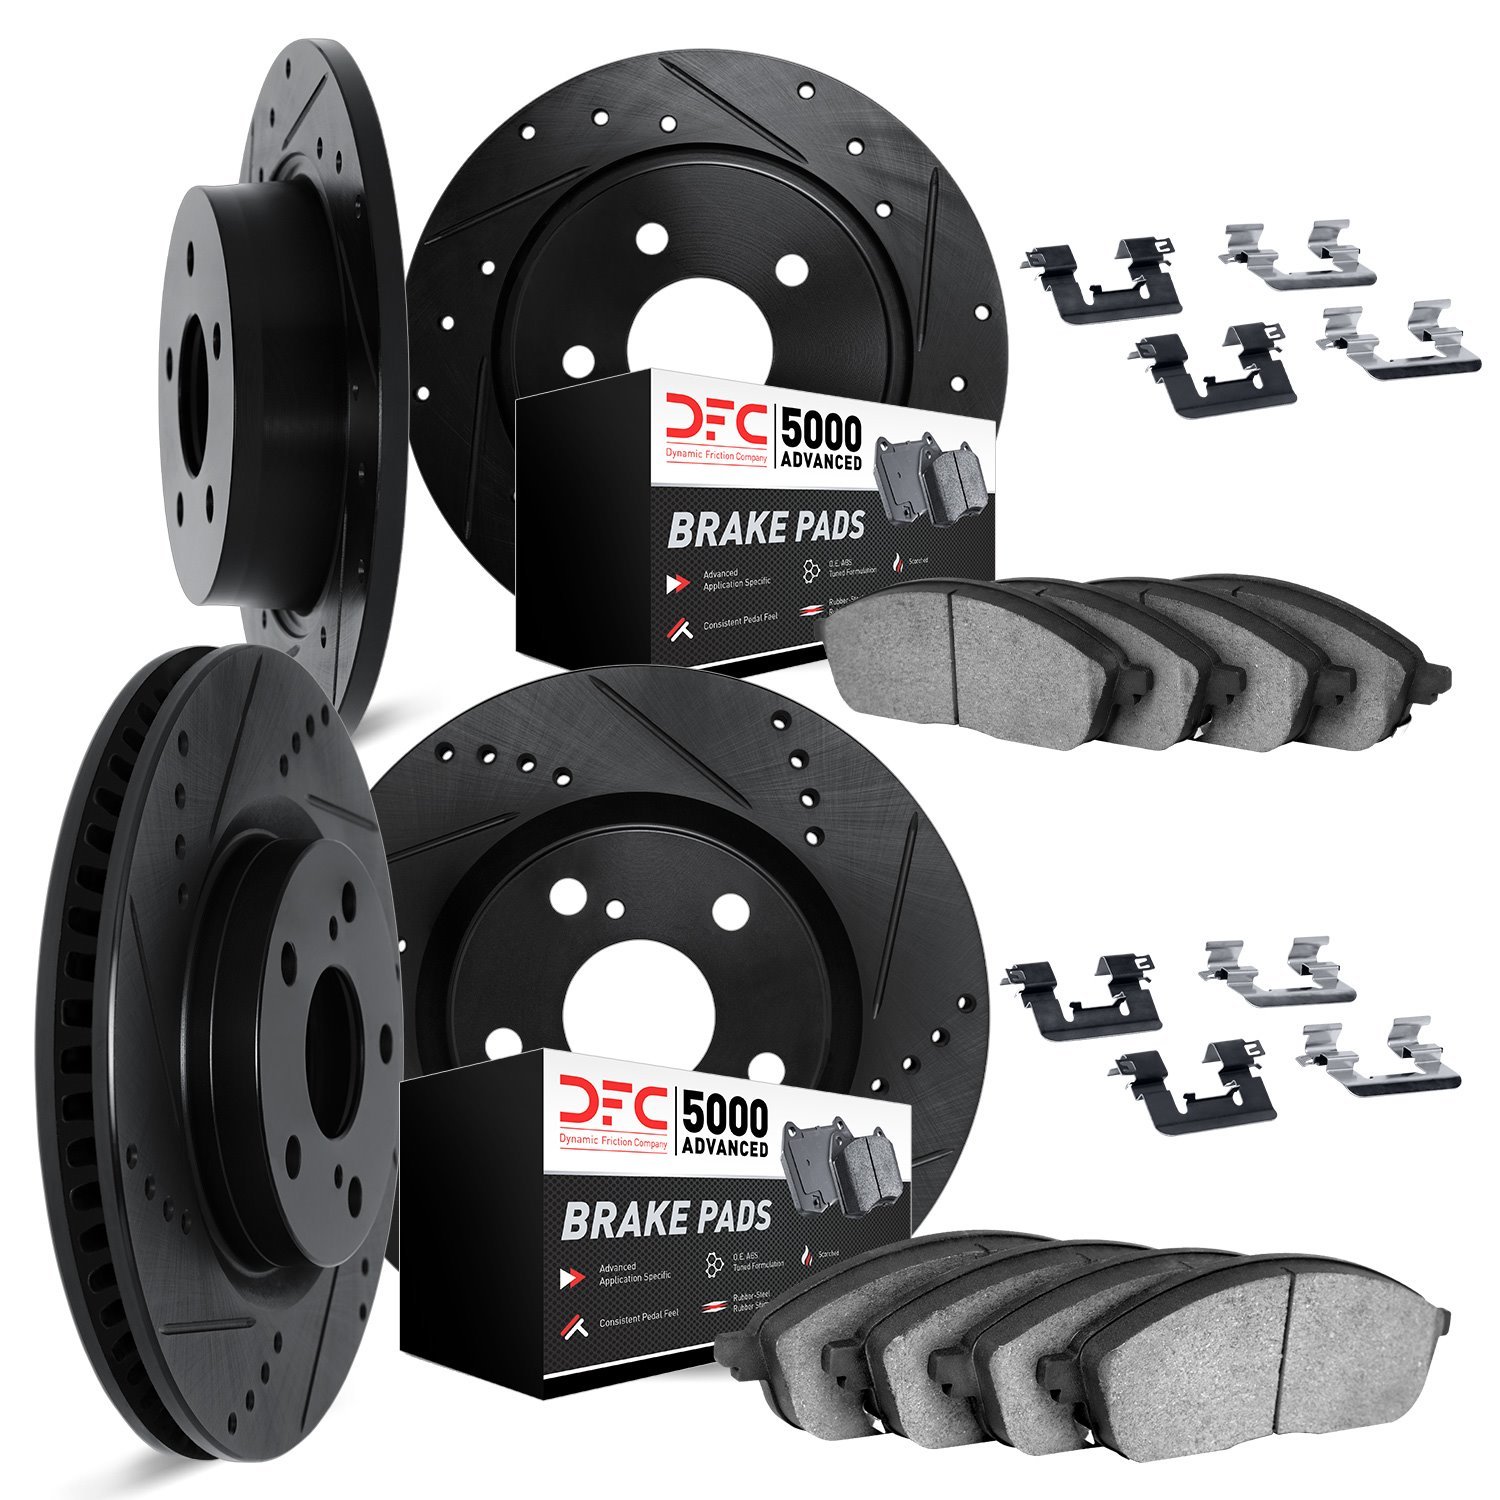 8514-76094 Drilled/Slotted Brake Rotors w/5000 Advanced Brake Pads Kit & Hardware [Black], 2010-2020 Lexus/Toyota/Scion, Positio